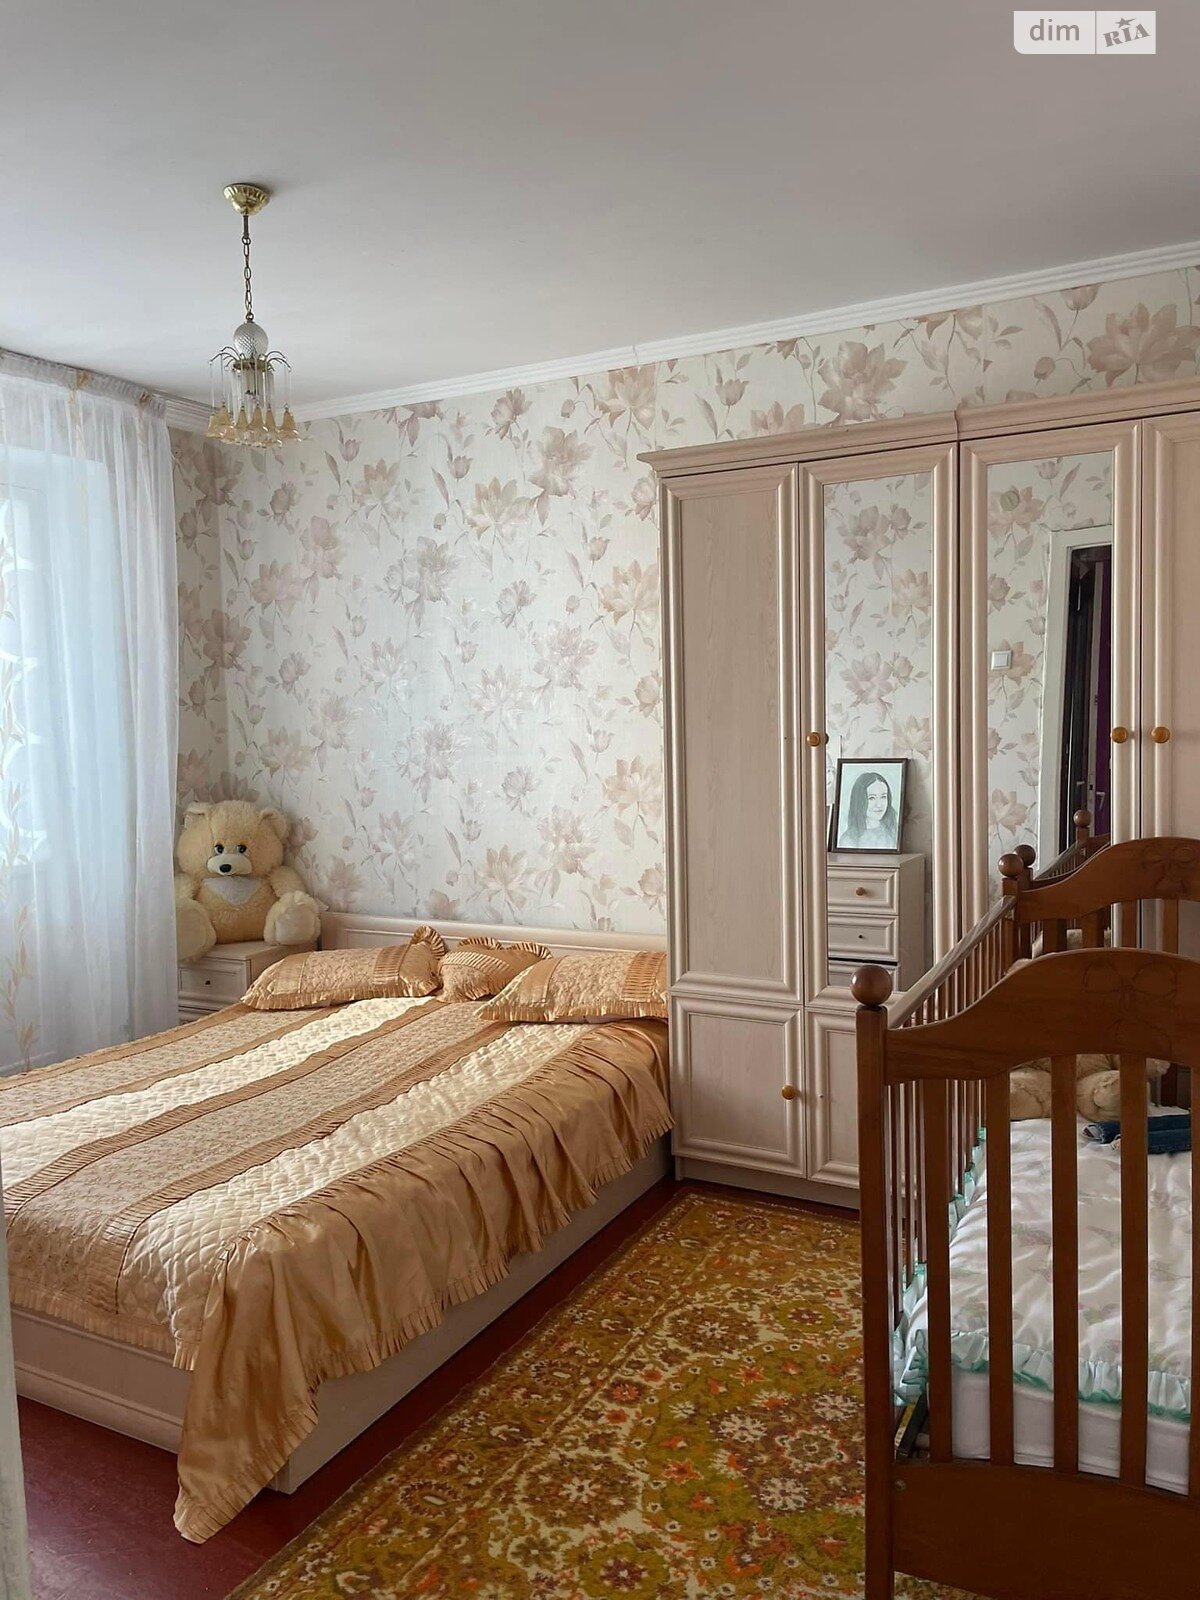 Продаж чотирикімнатної квартири в Нововолинську, на вул. Сірка, район Нововолинськ фото 1